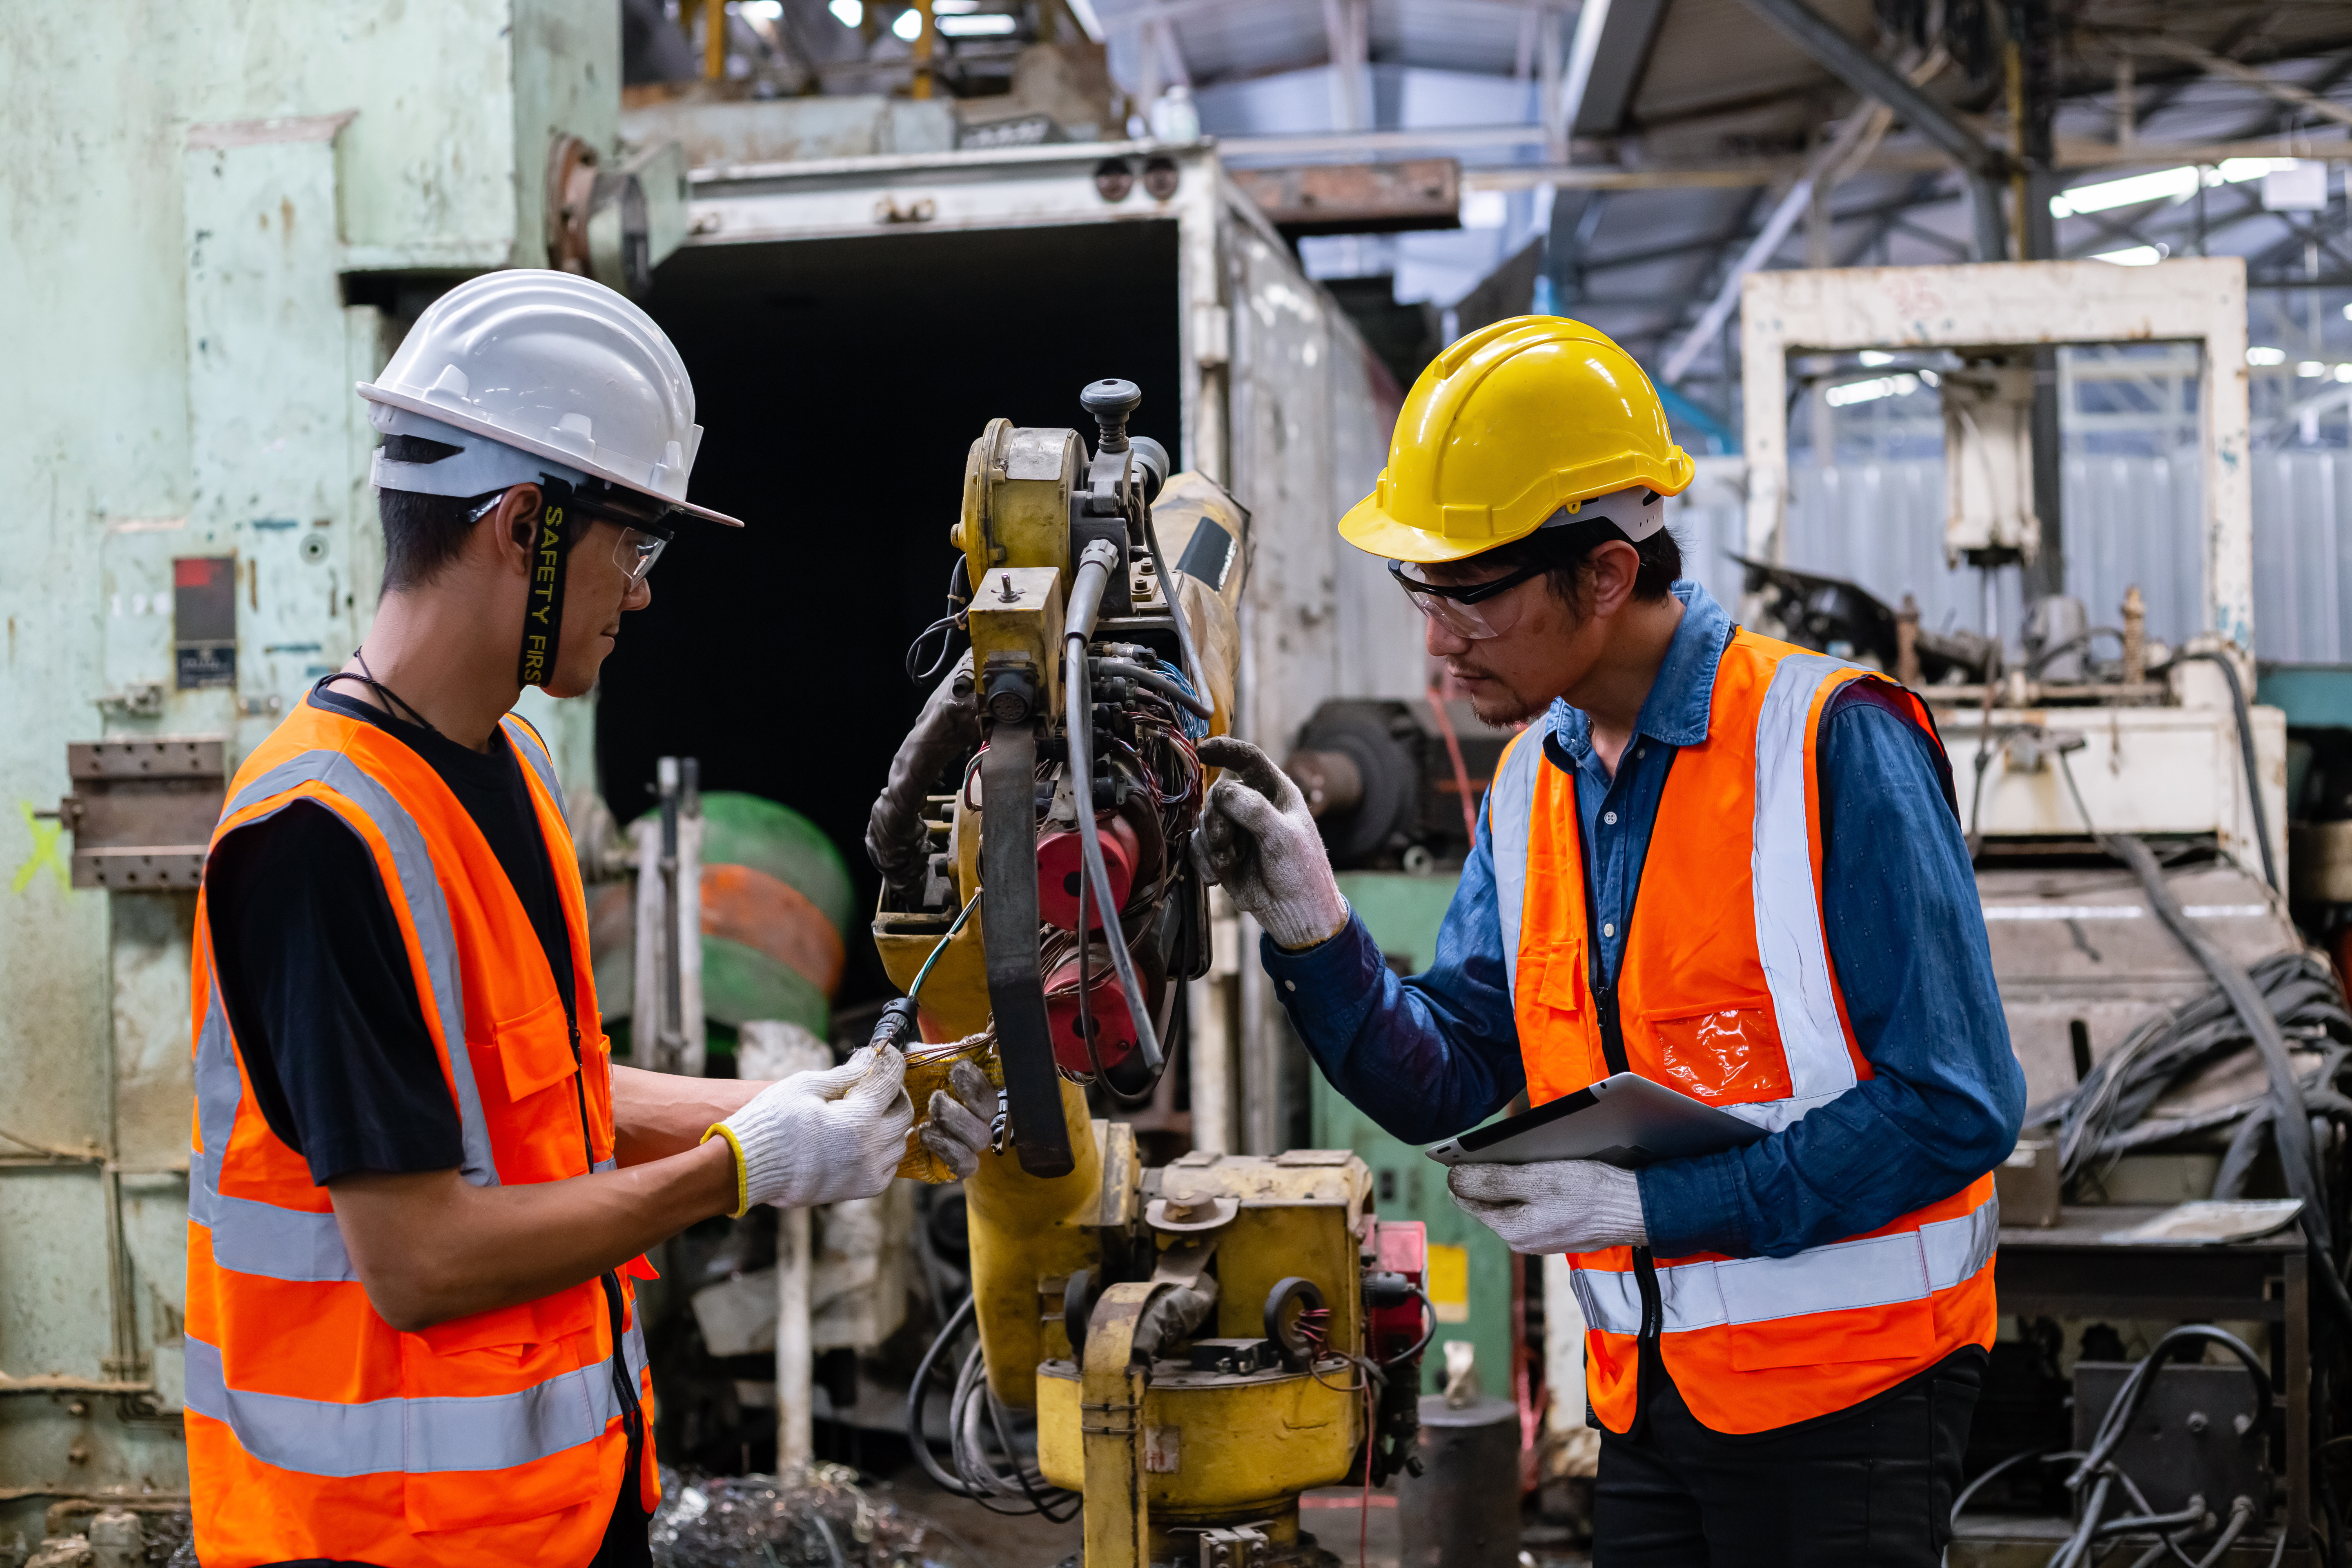 engineering team worker wearing uniform safety and hardhat working machine lathe metal.